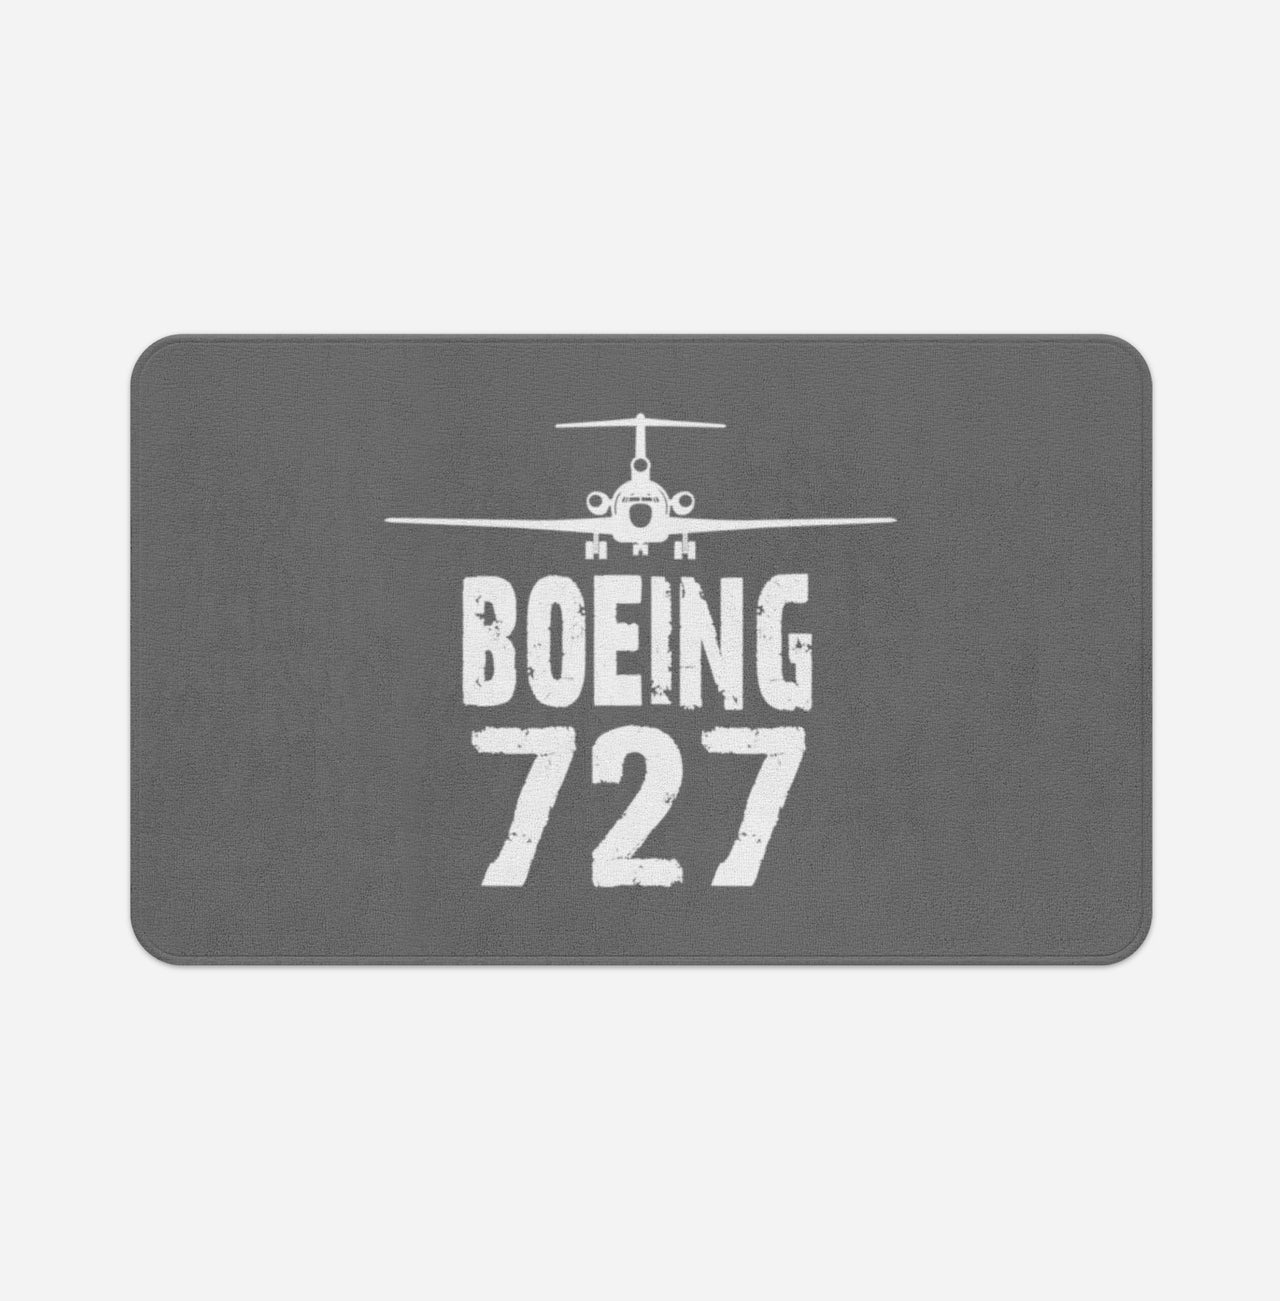 Boeing 727 & Plane Designed Bath Mats